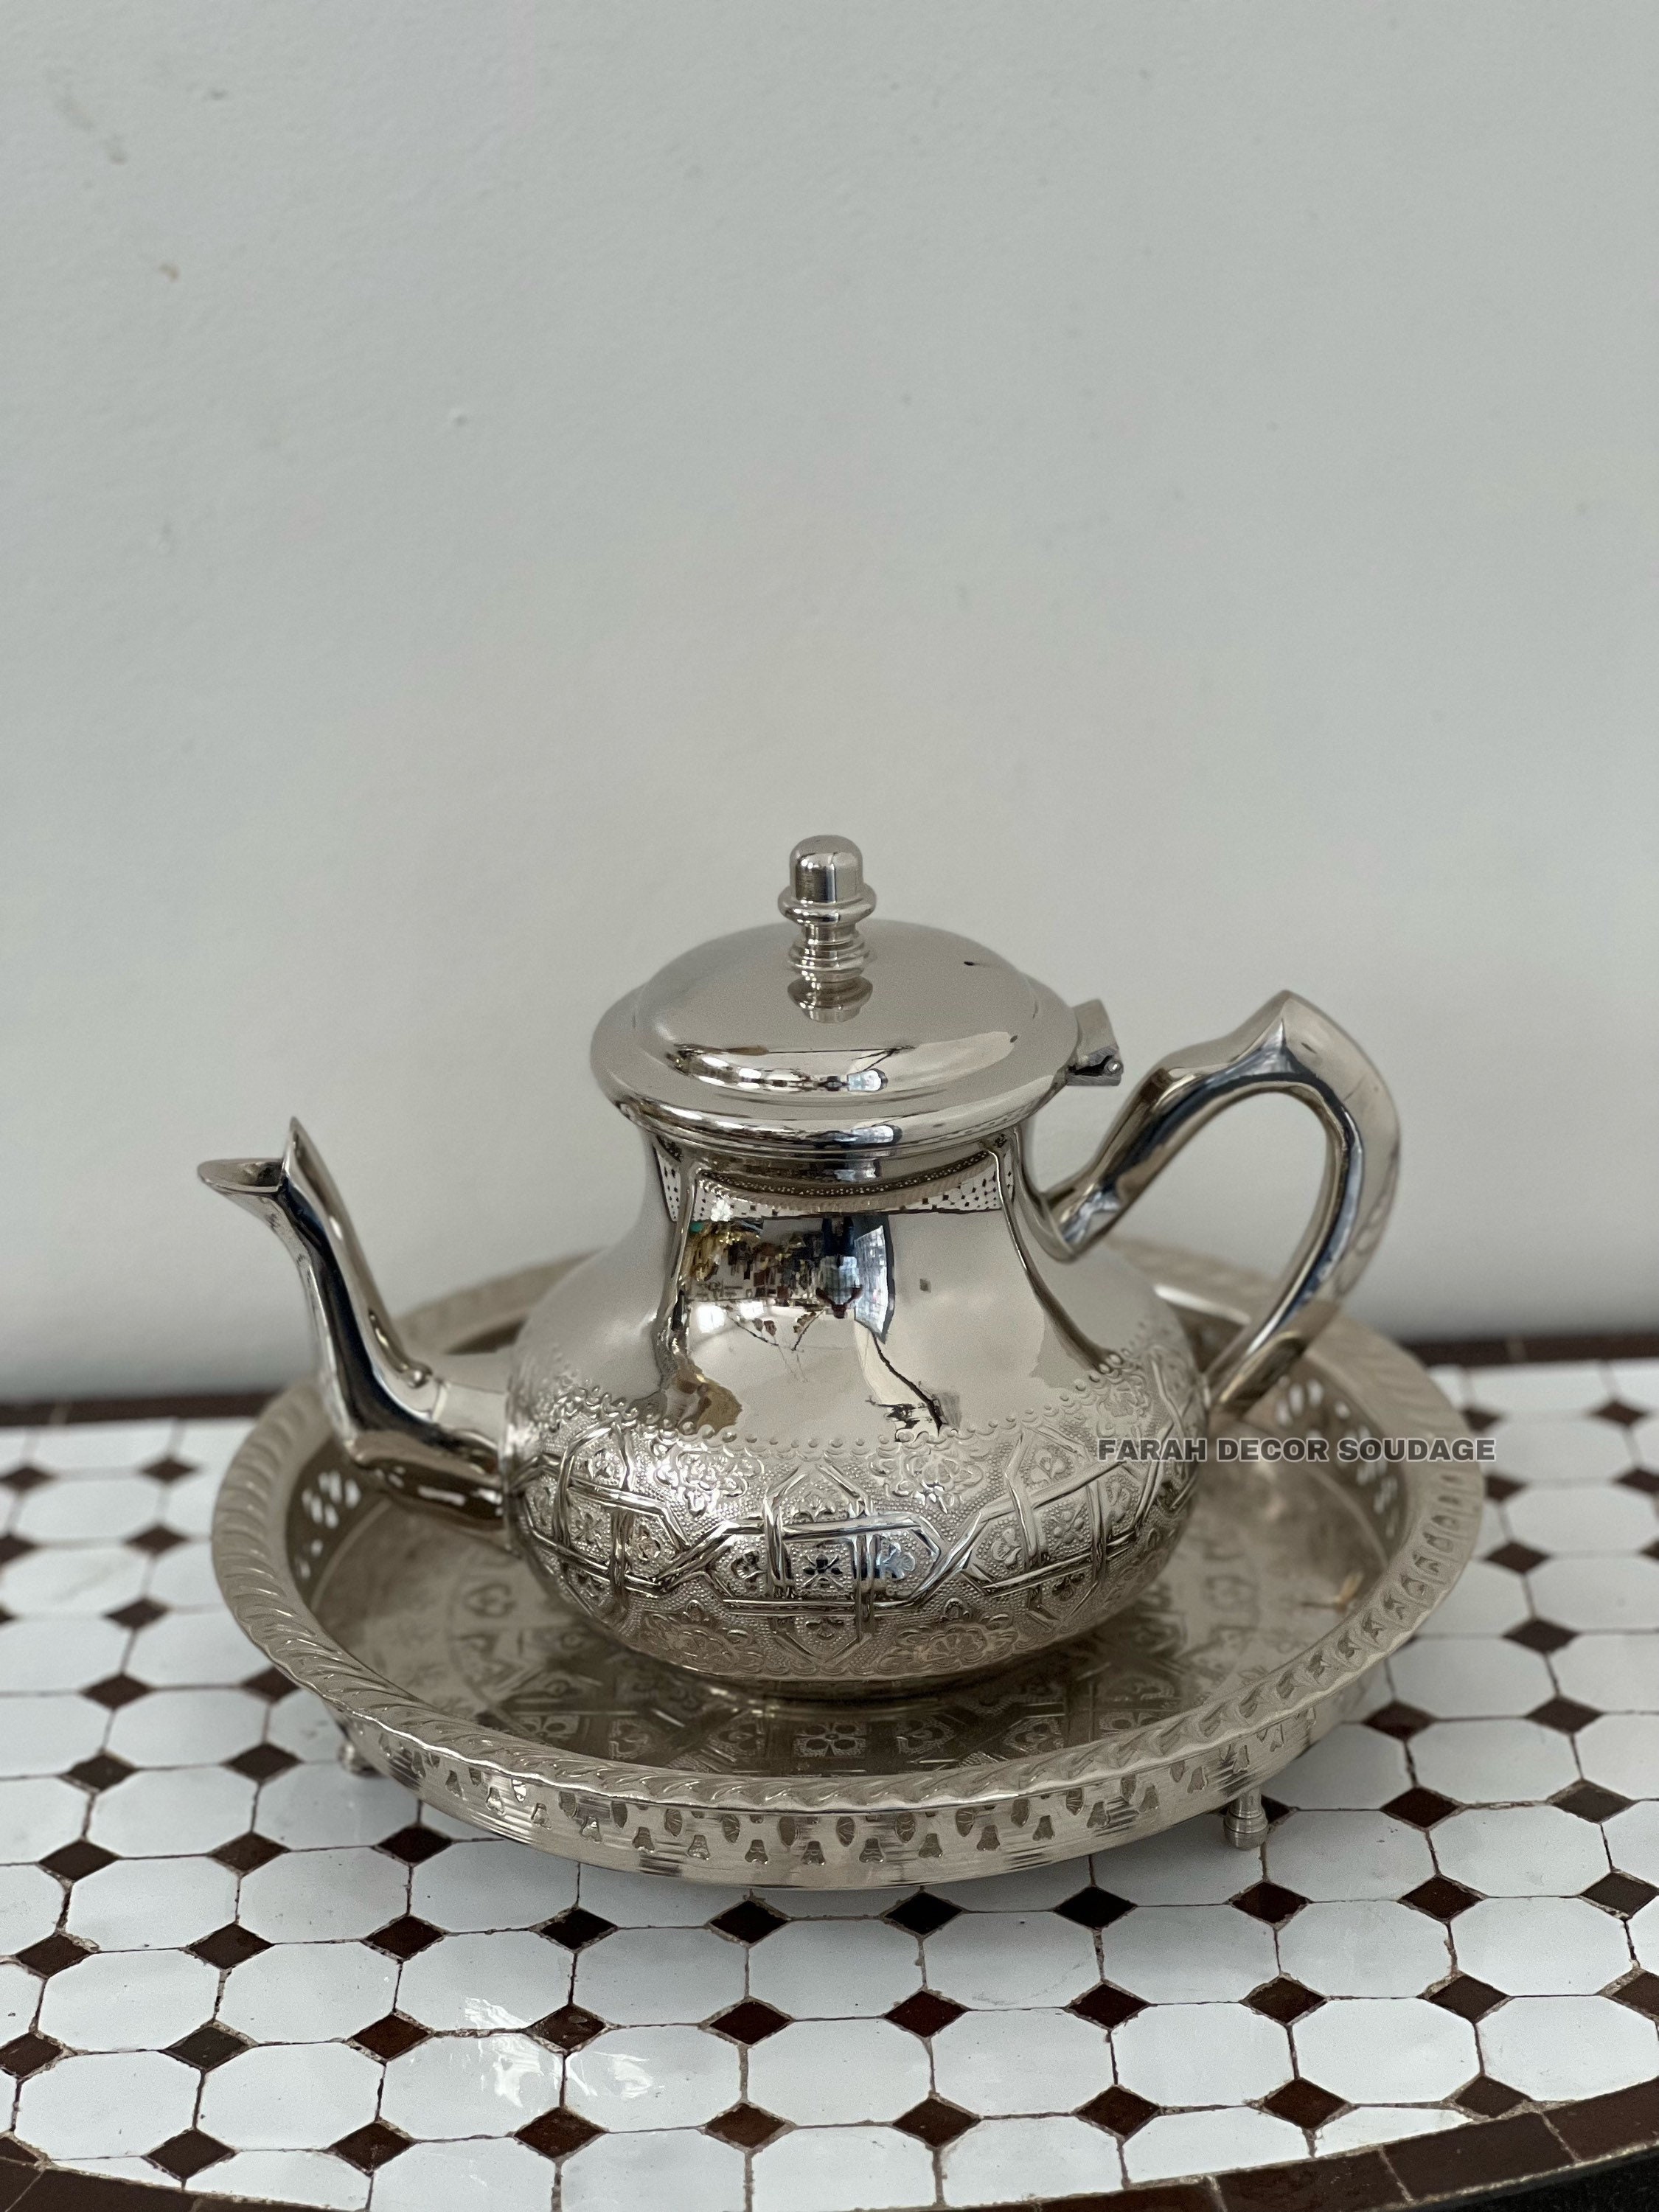 Set of 6 Handmade Arabesque Style Tea Glasses (Tunisia) - Bed Bath